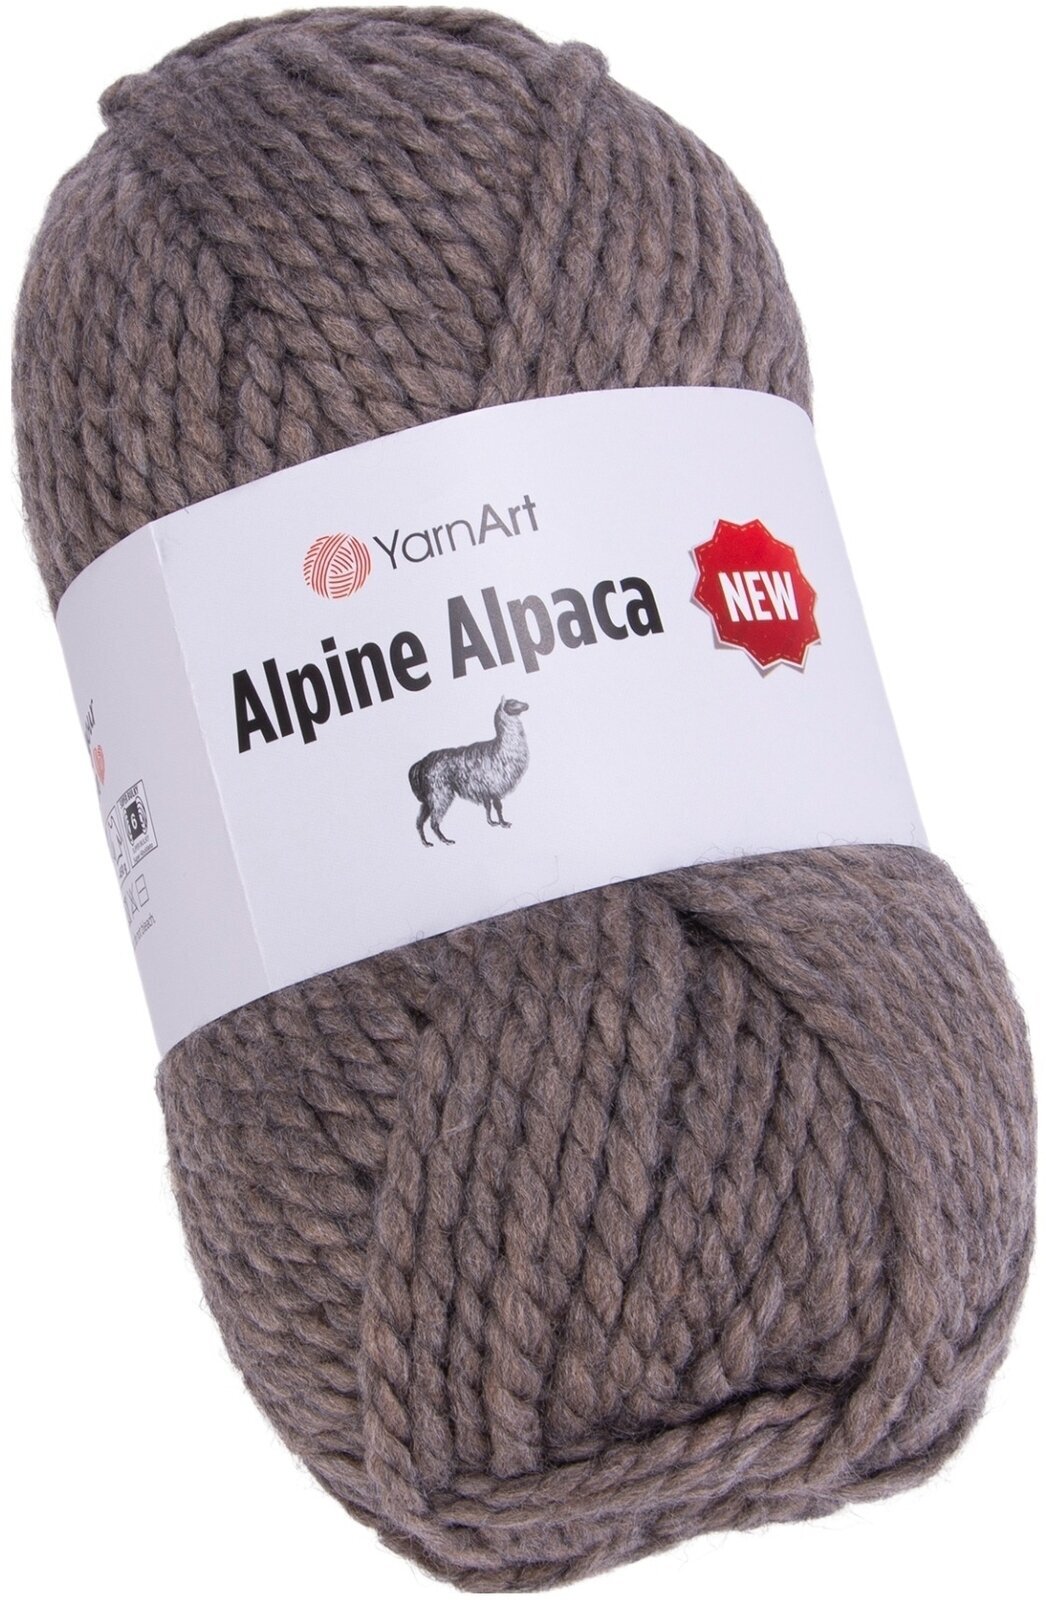 Knitting Yarn Yarn Art Alpine Alpaca 1438